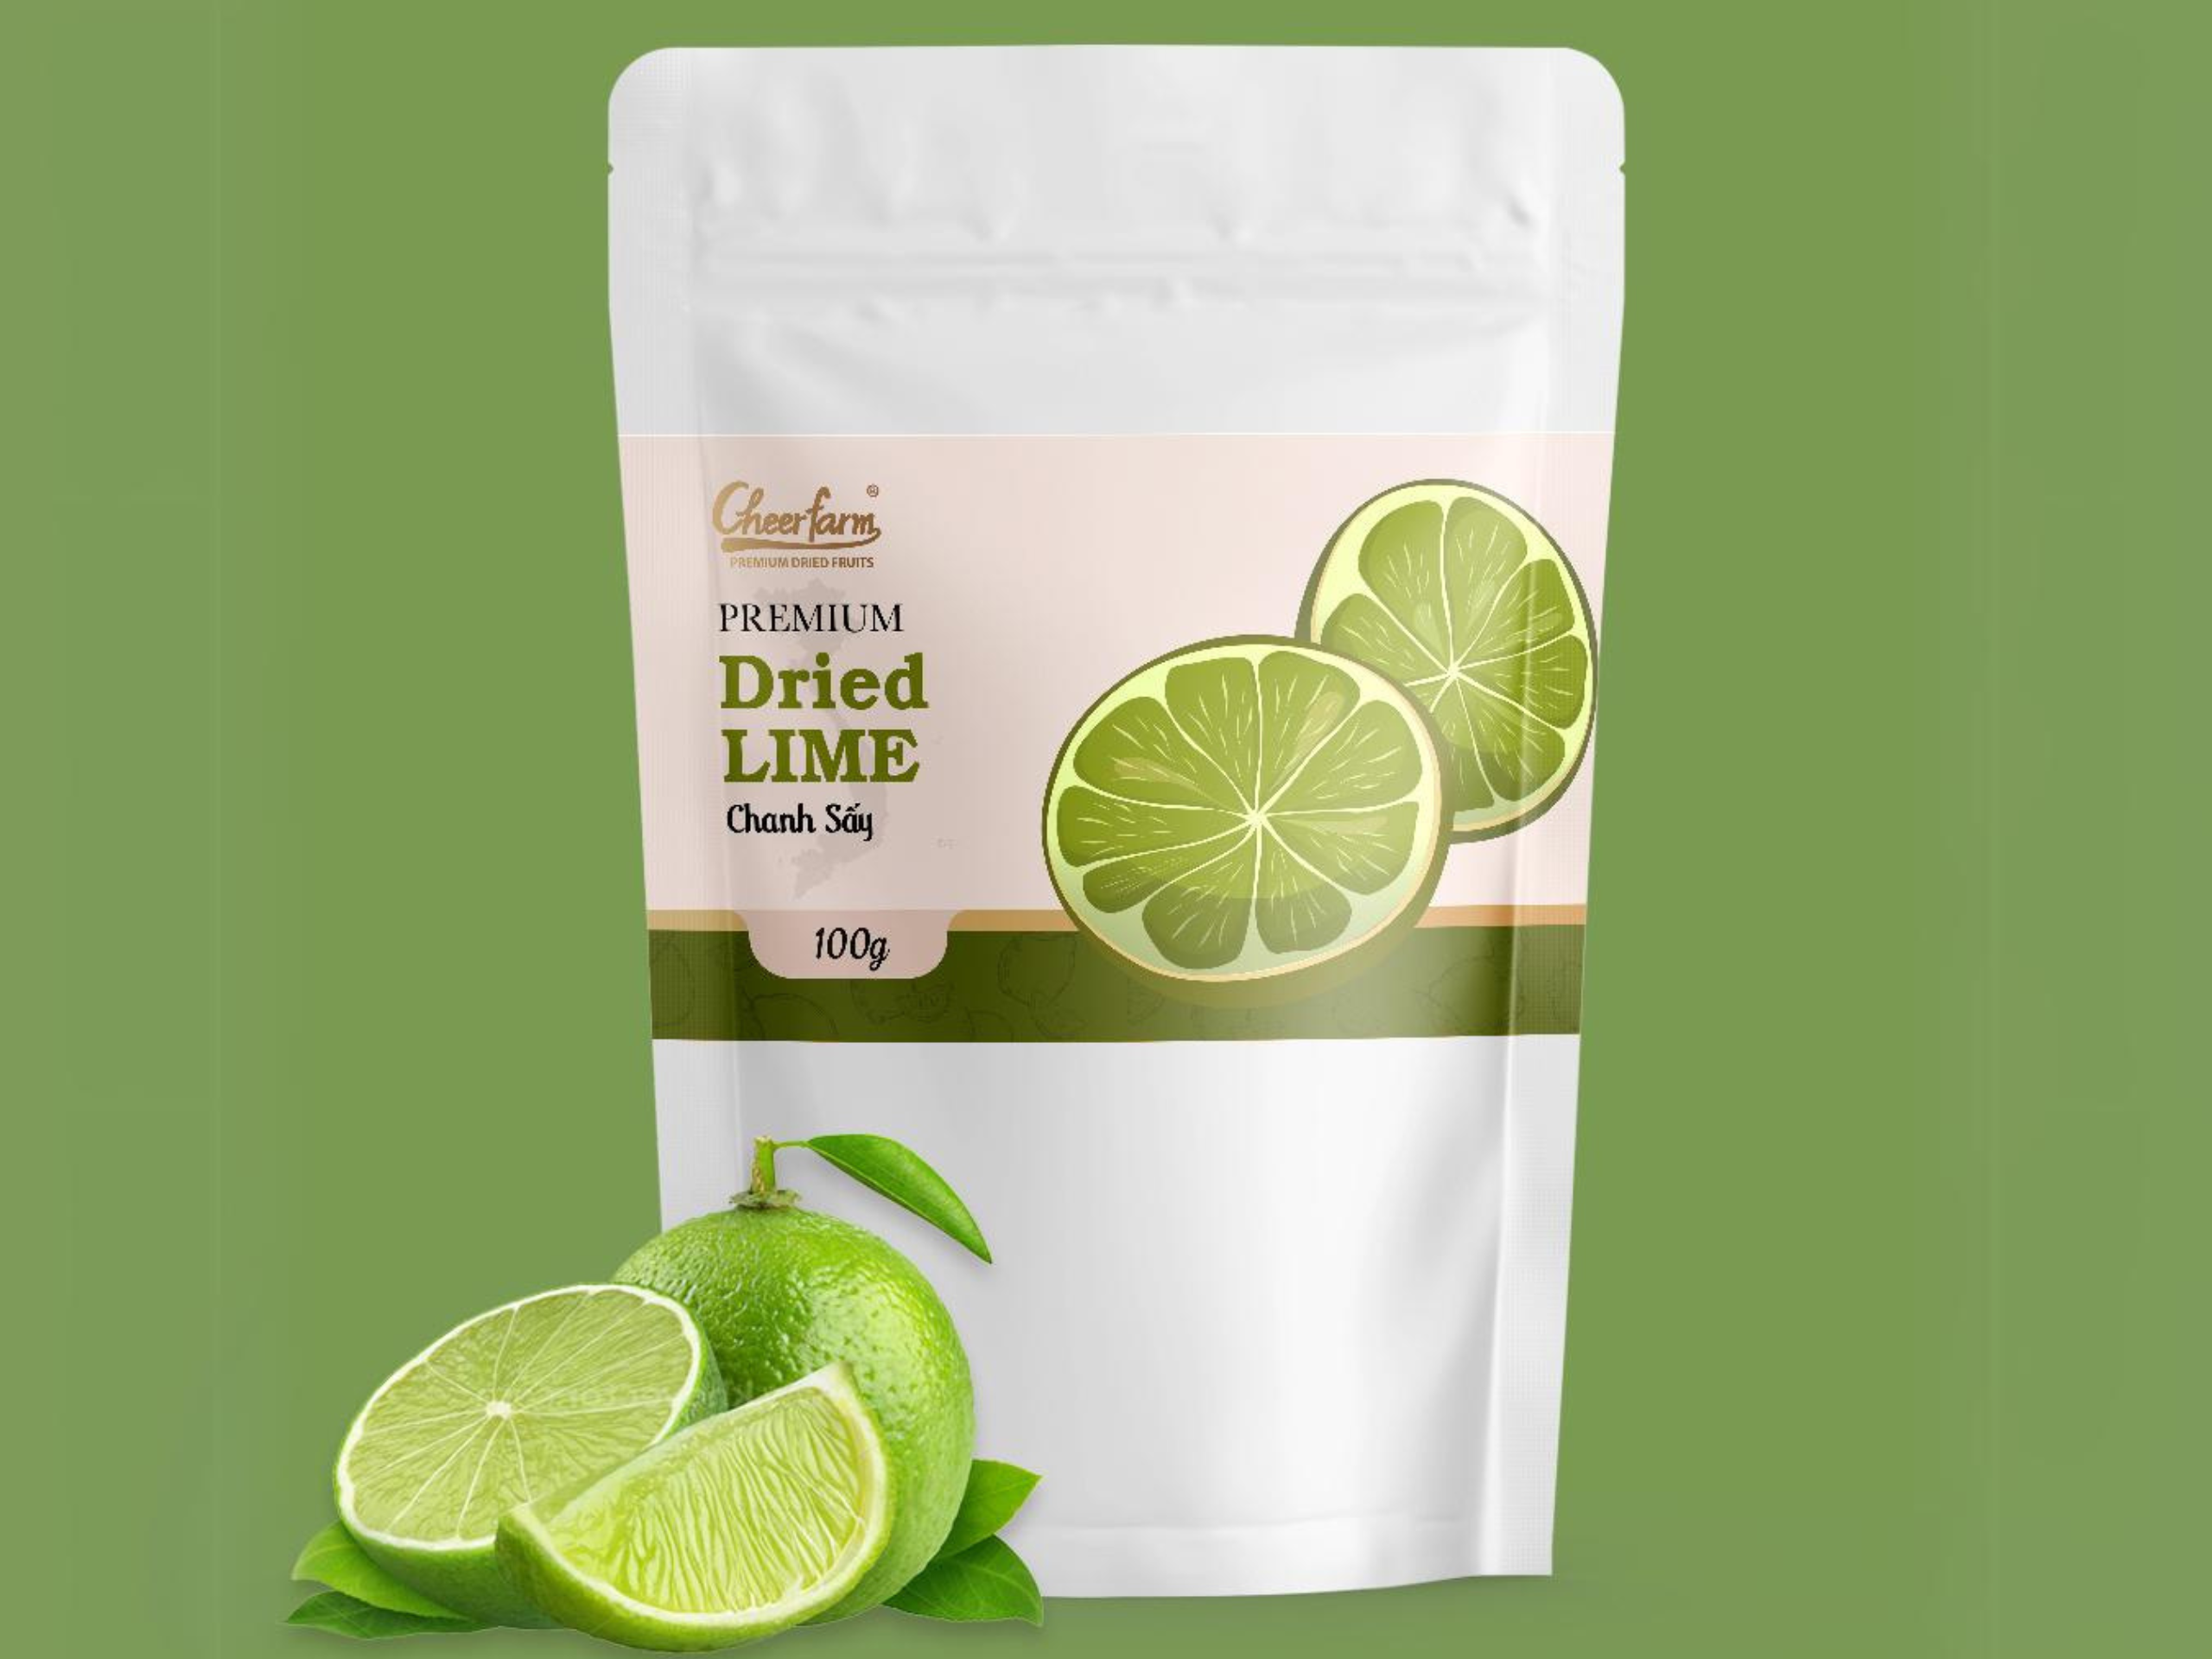 Packaging lime in cheerfarm, premium dried fruits